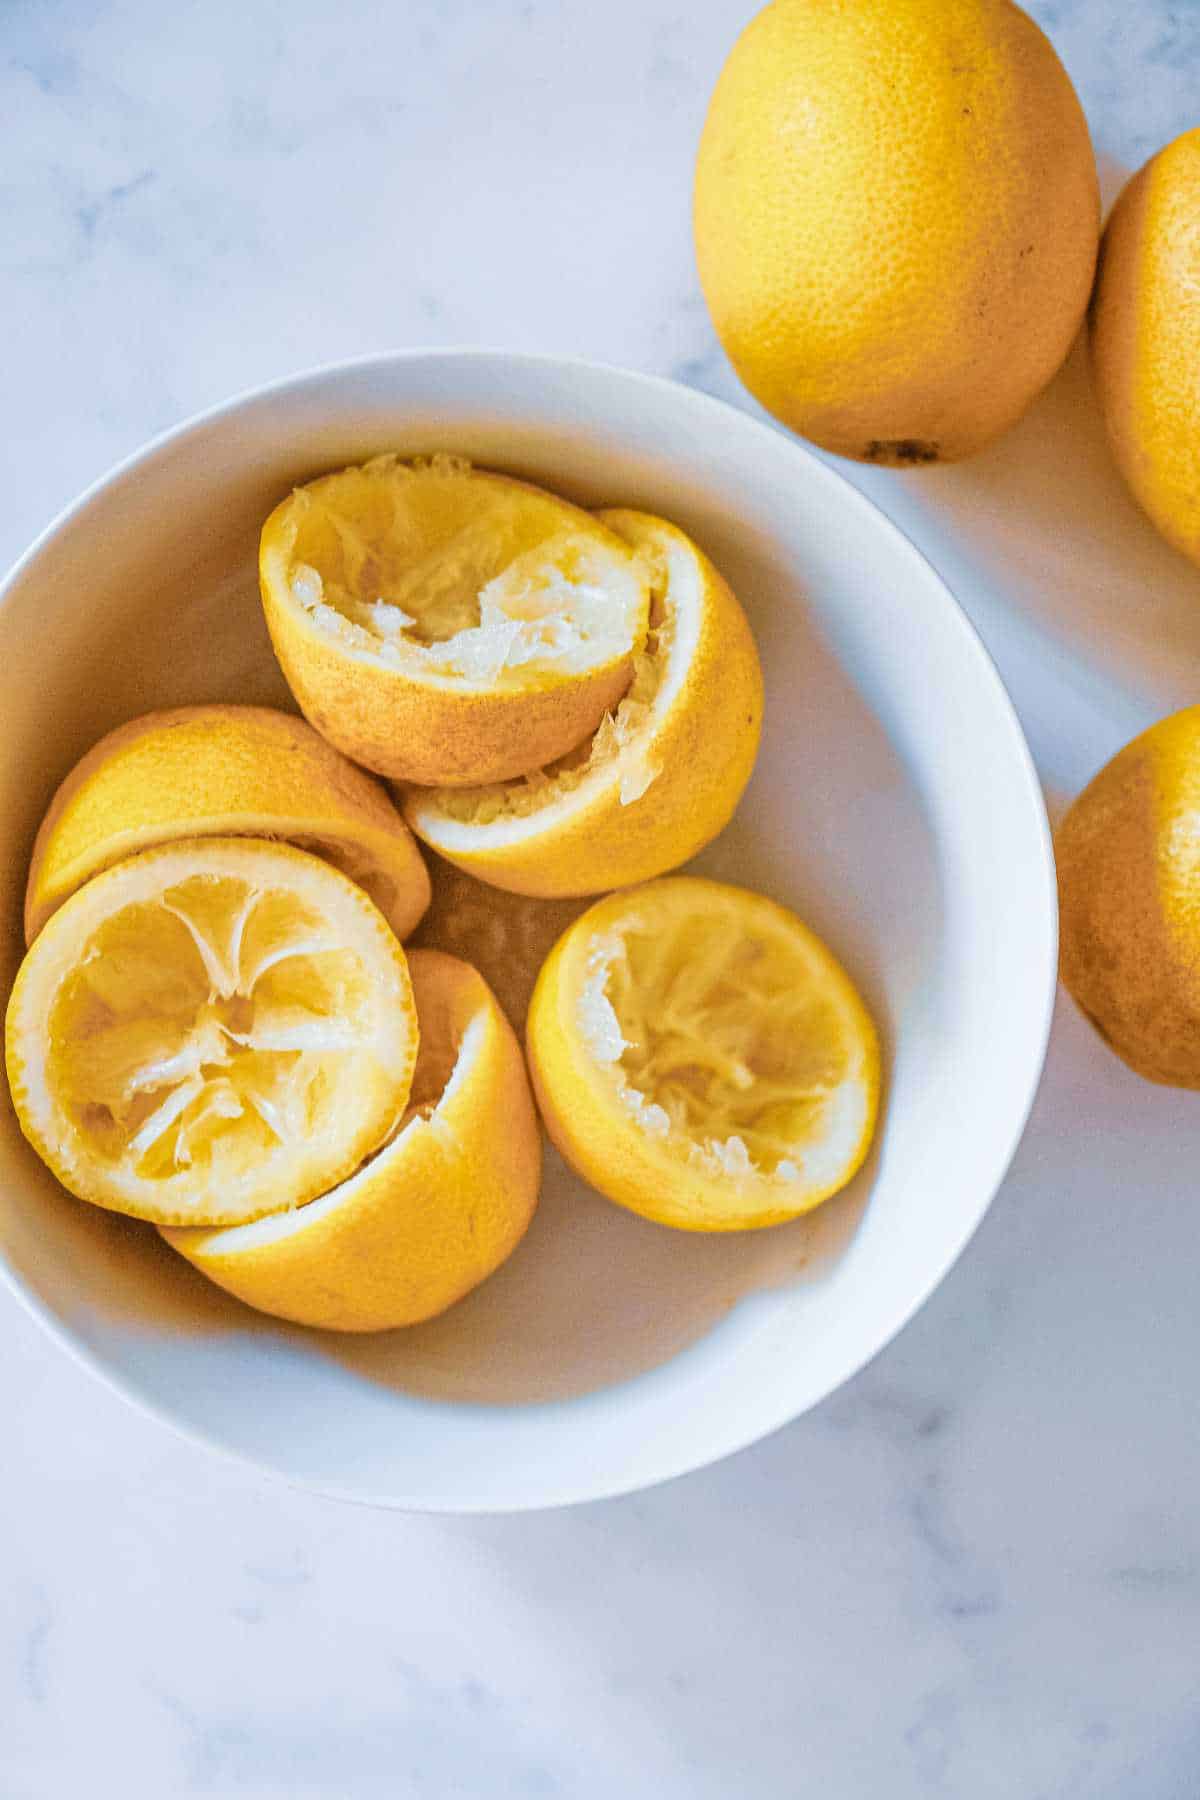 Juiced lemon halves in a bowl.